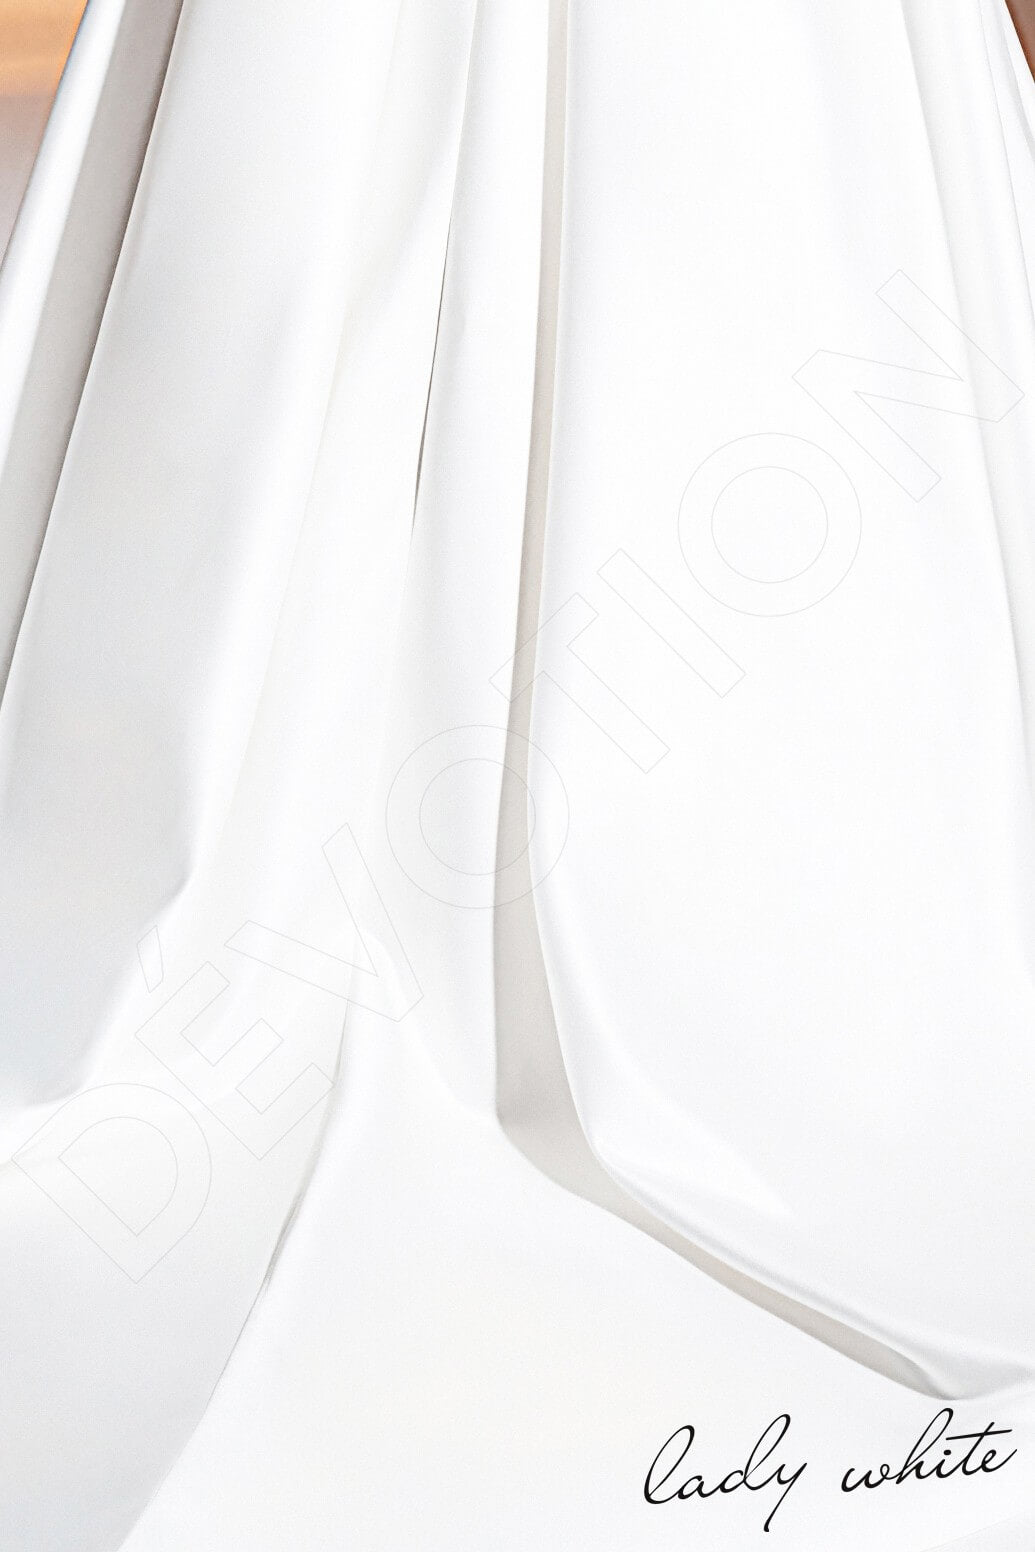 Anipe A-line Illusion Ivory Wedding dress